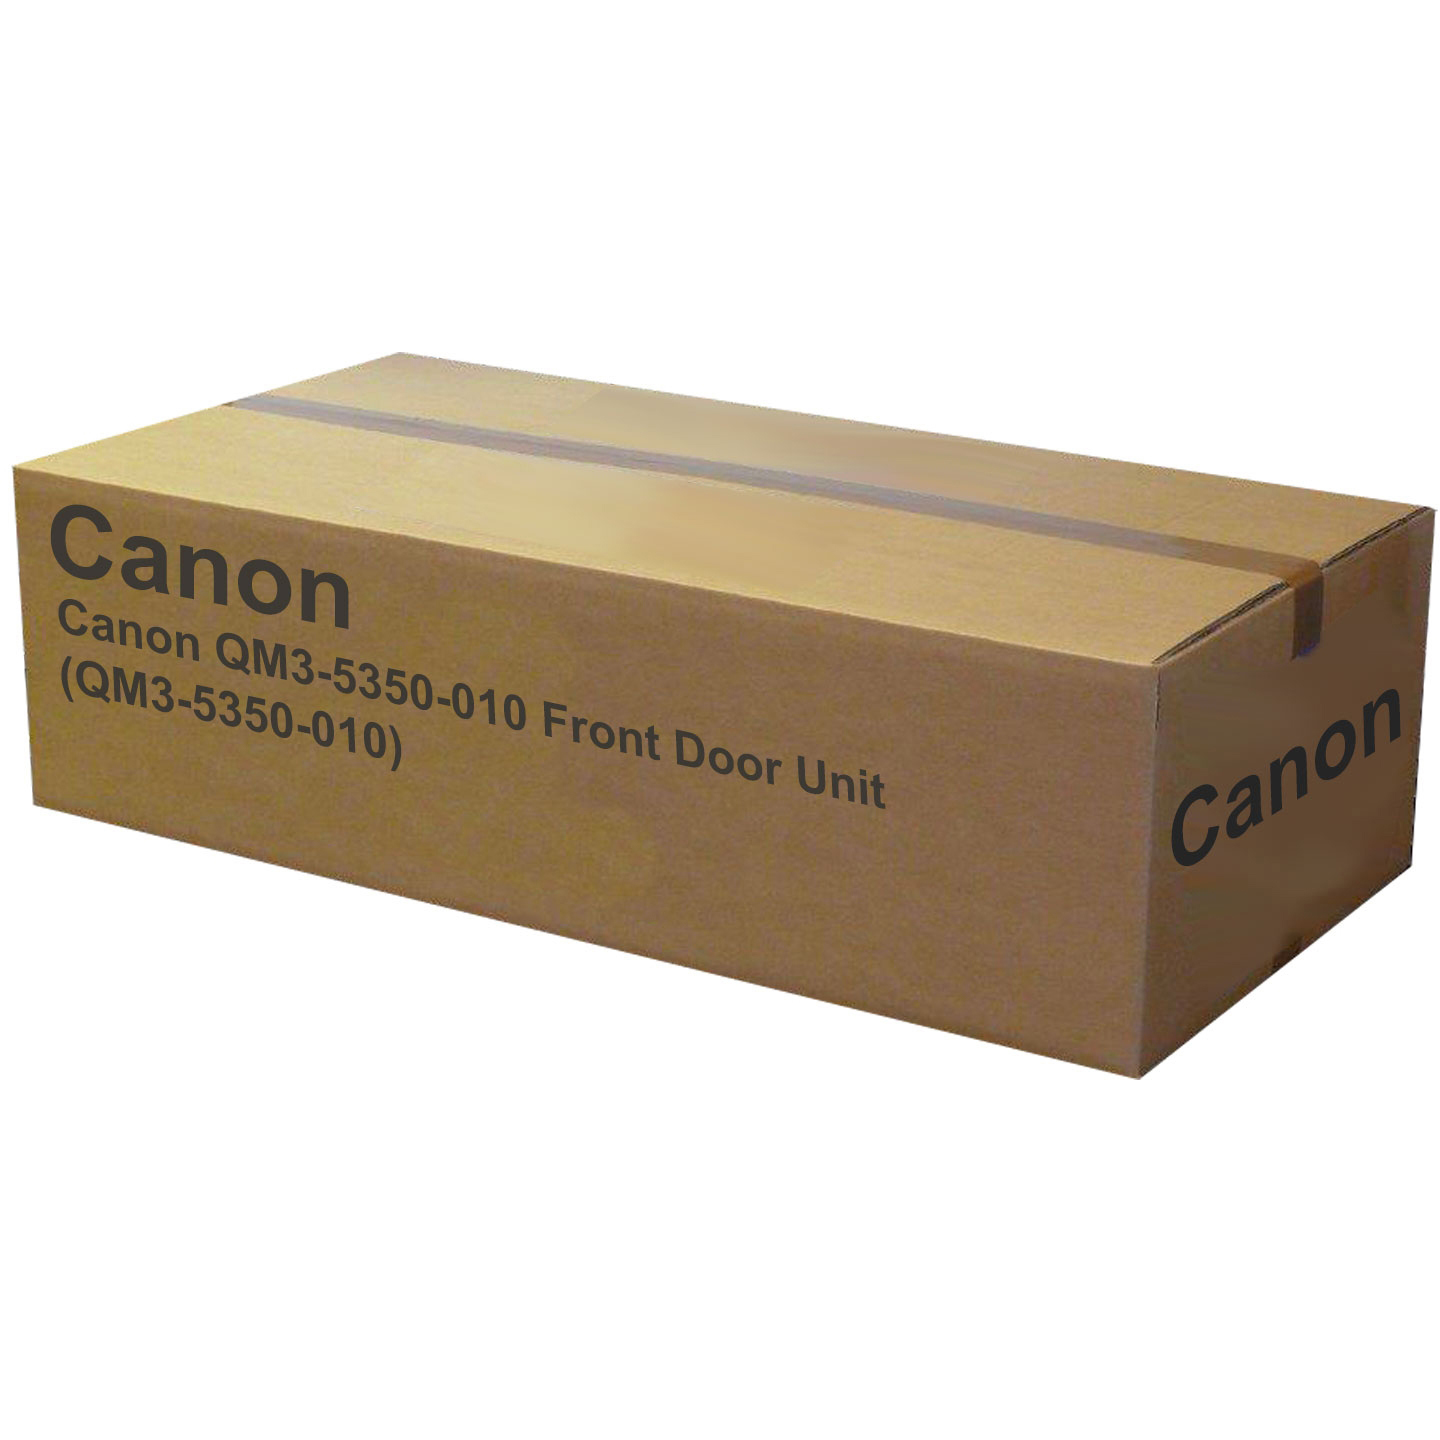 Original Canon QM3-5350-010 Front Door Unit (QM3-5350-010)